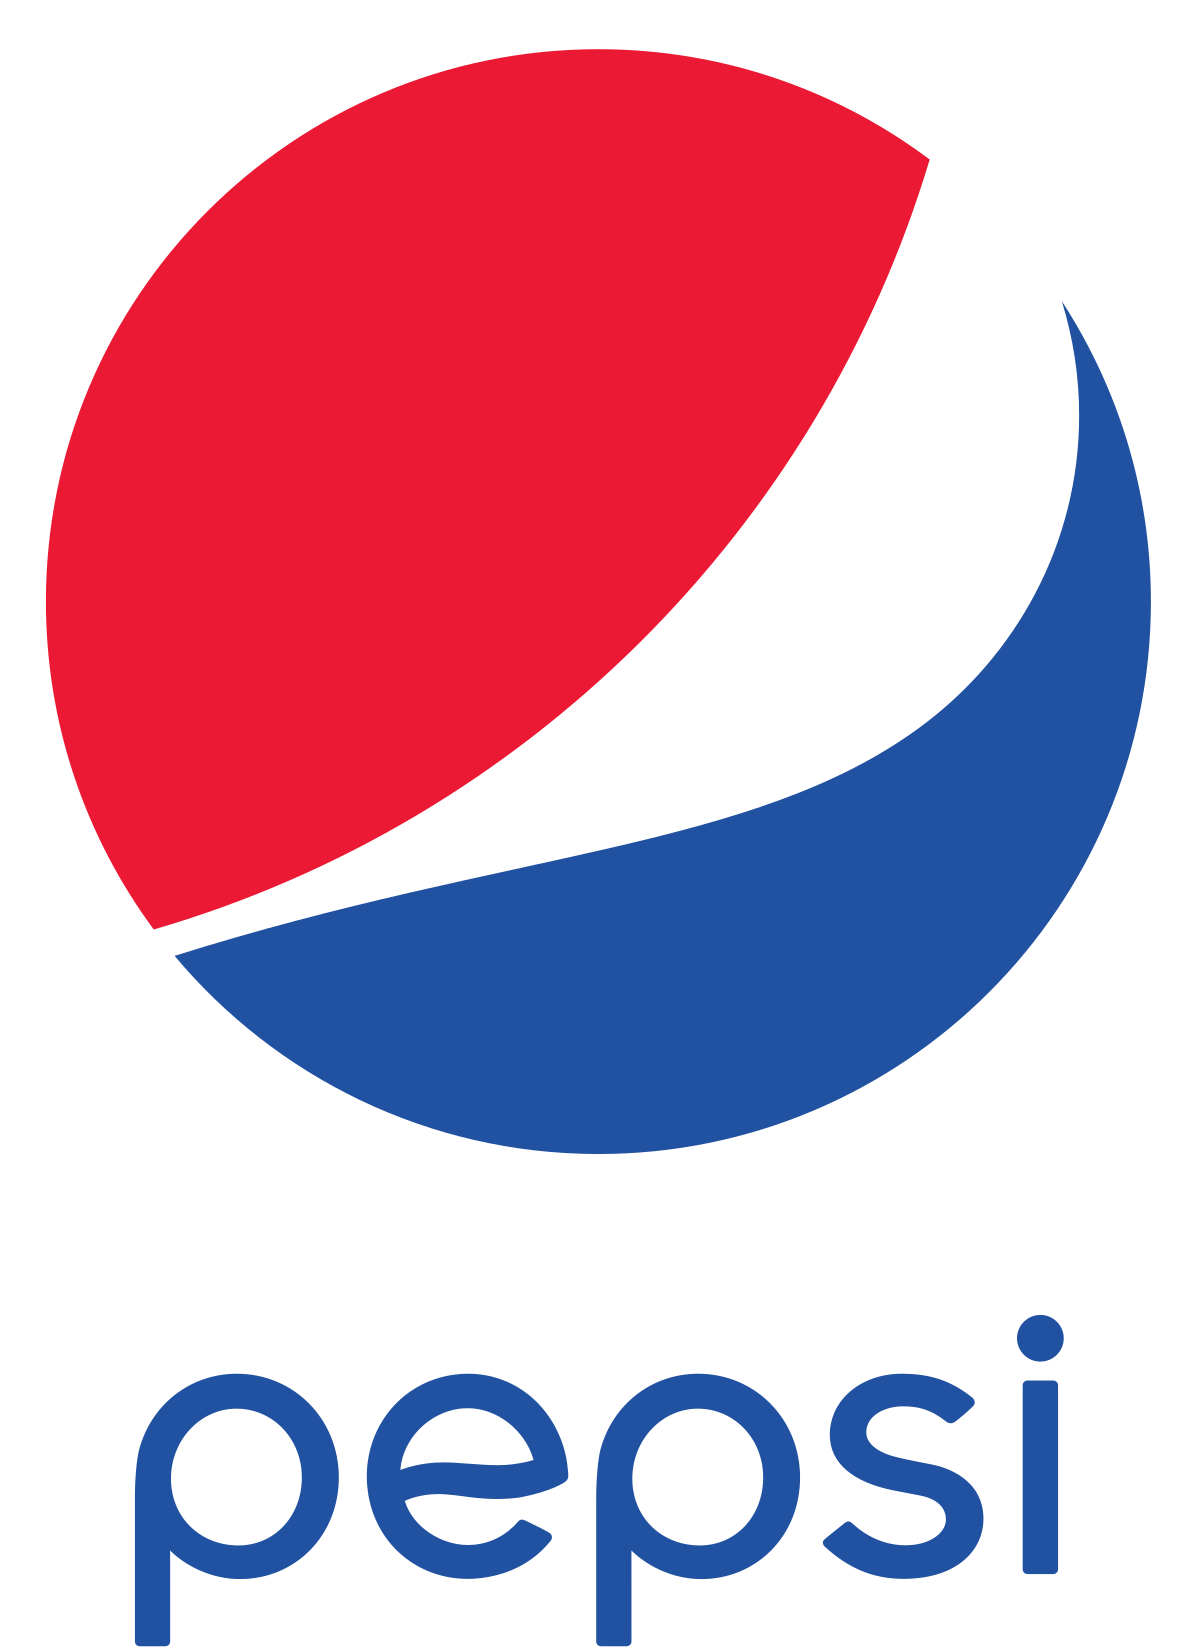 Pepsi Logo Background PNG Image